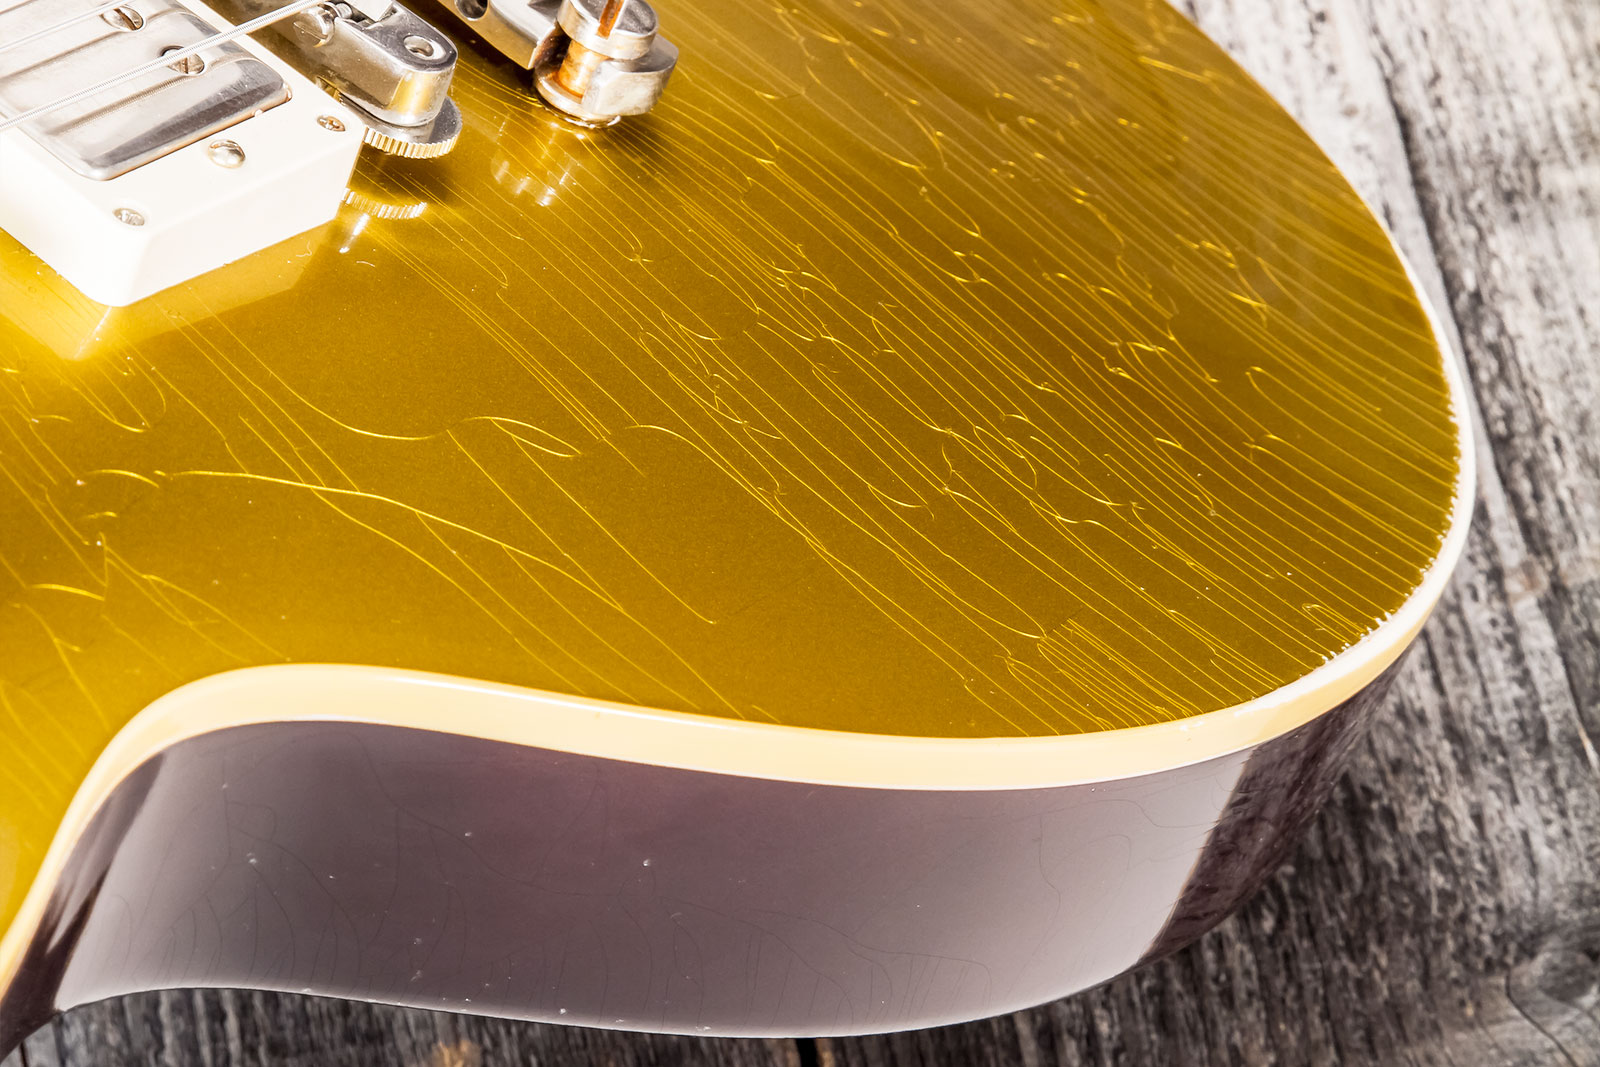 Gibson Custom Shop Murphy Lab Les Paul Goldtop 1957 Reissue 2h Ht Rw #721287 - Light Aged Double Gold With Dark Back - Enkel gesneden elektrische gita